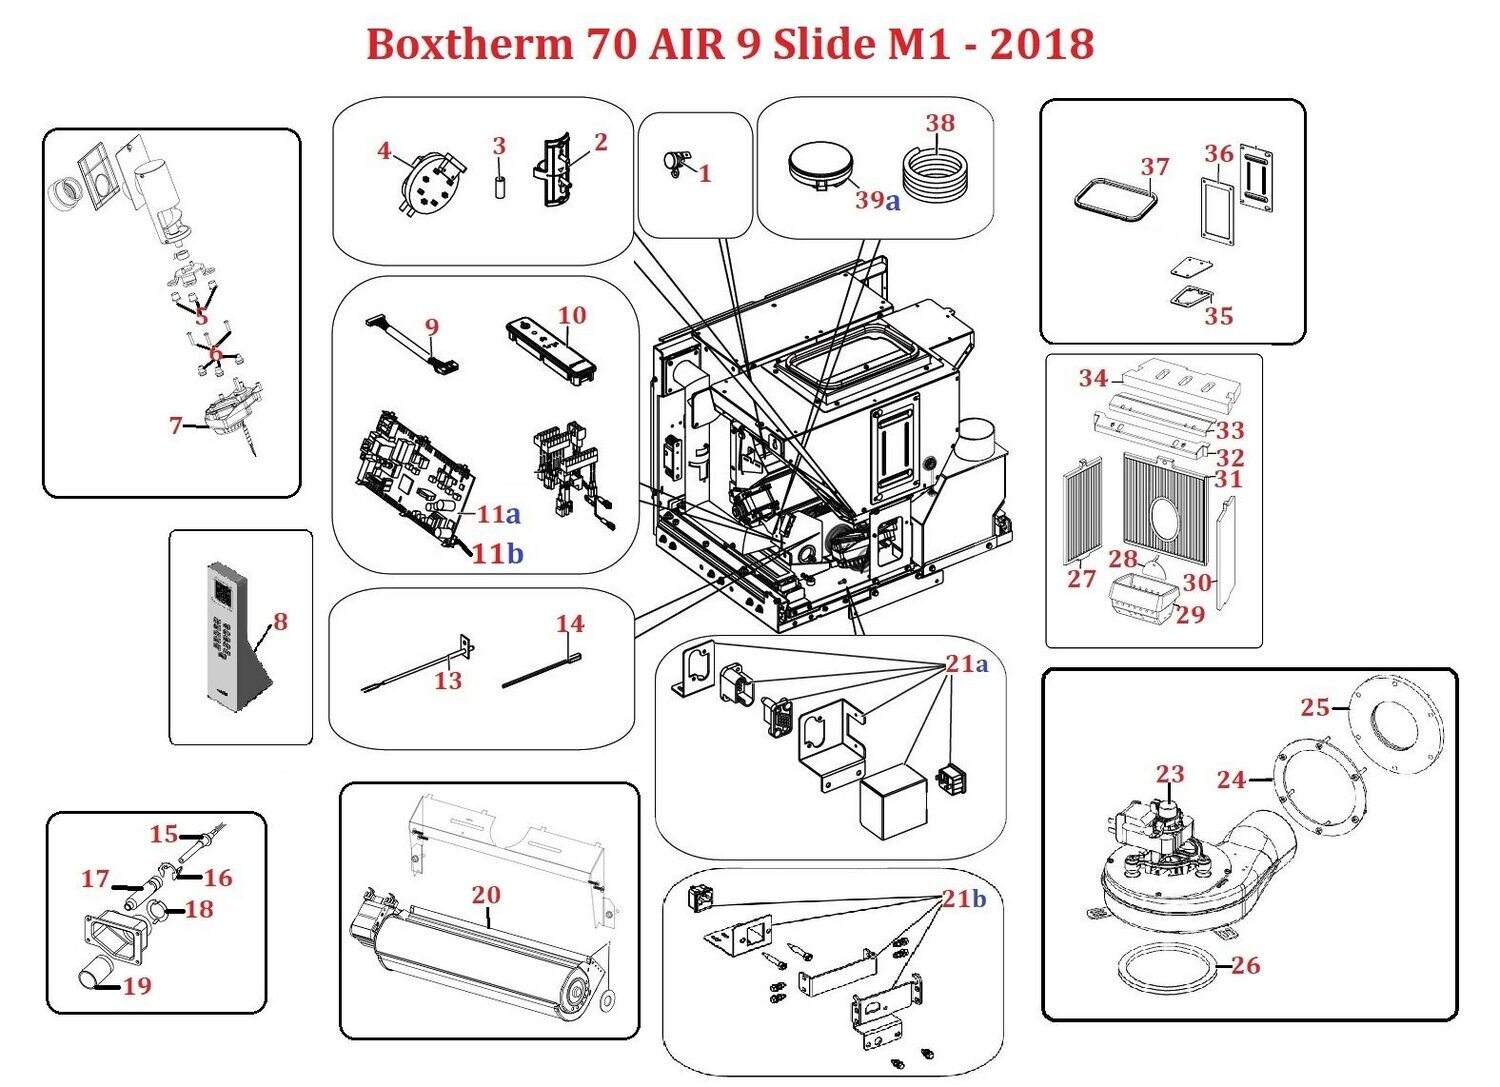 Boxtherm 70 AIR 9 Slide M1 - 2018